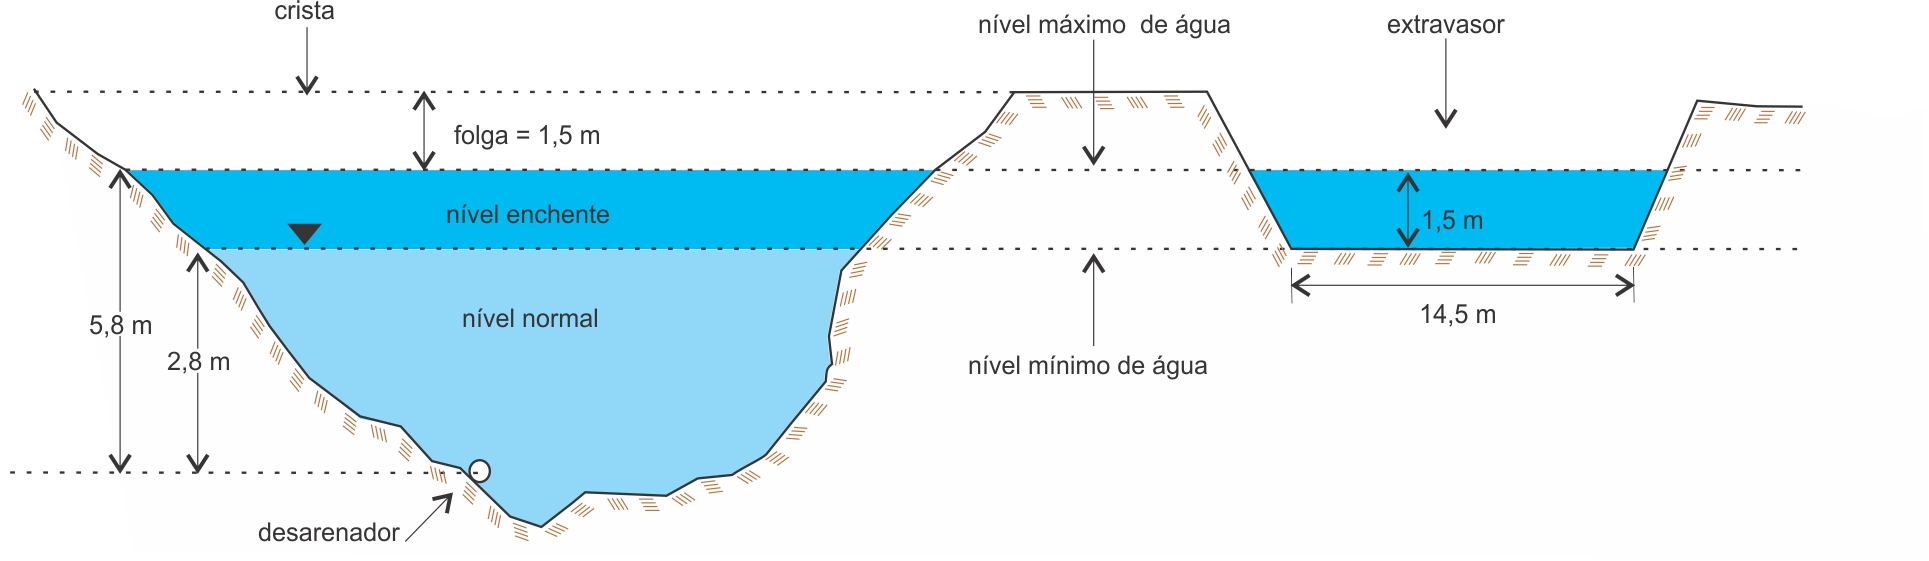 Figura 12  Perfil longitudinal da barragem